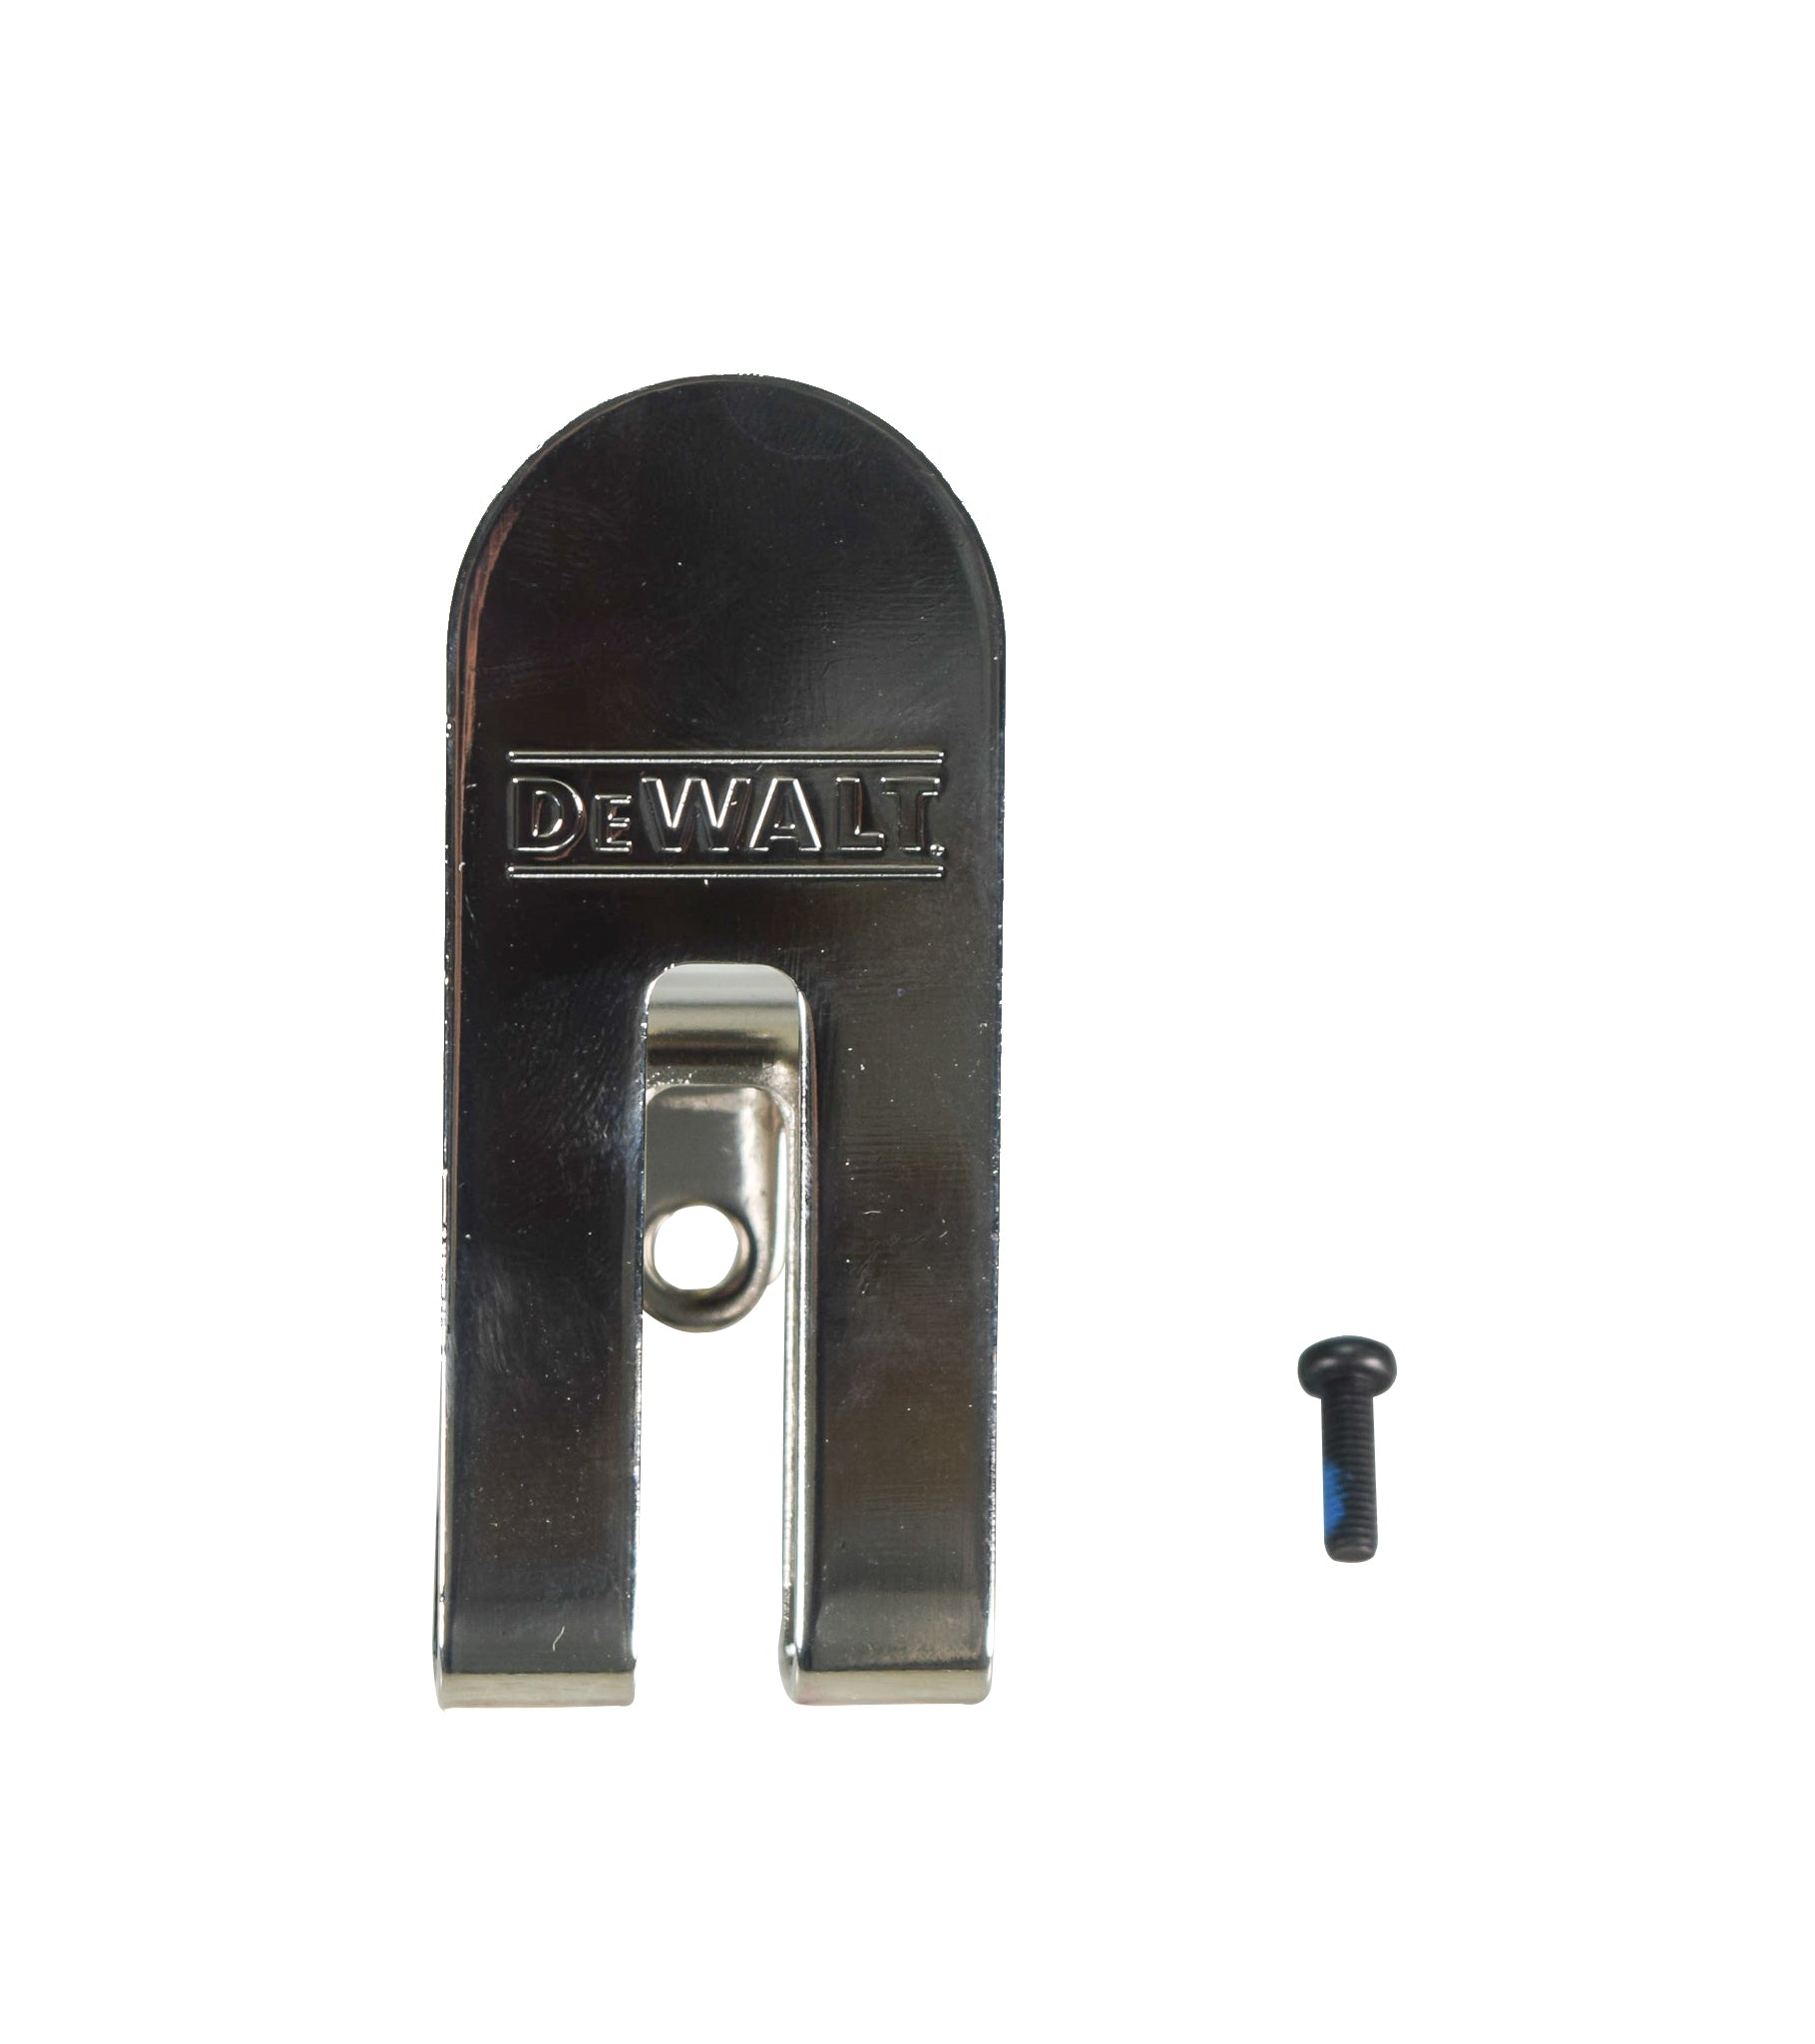 Dewalt DCH072B  12-Volt Max Sds-plus Cordless Rotary Hammer Drill (Tool Only)